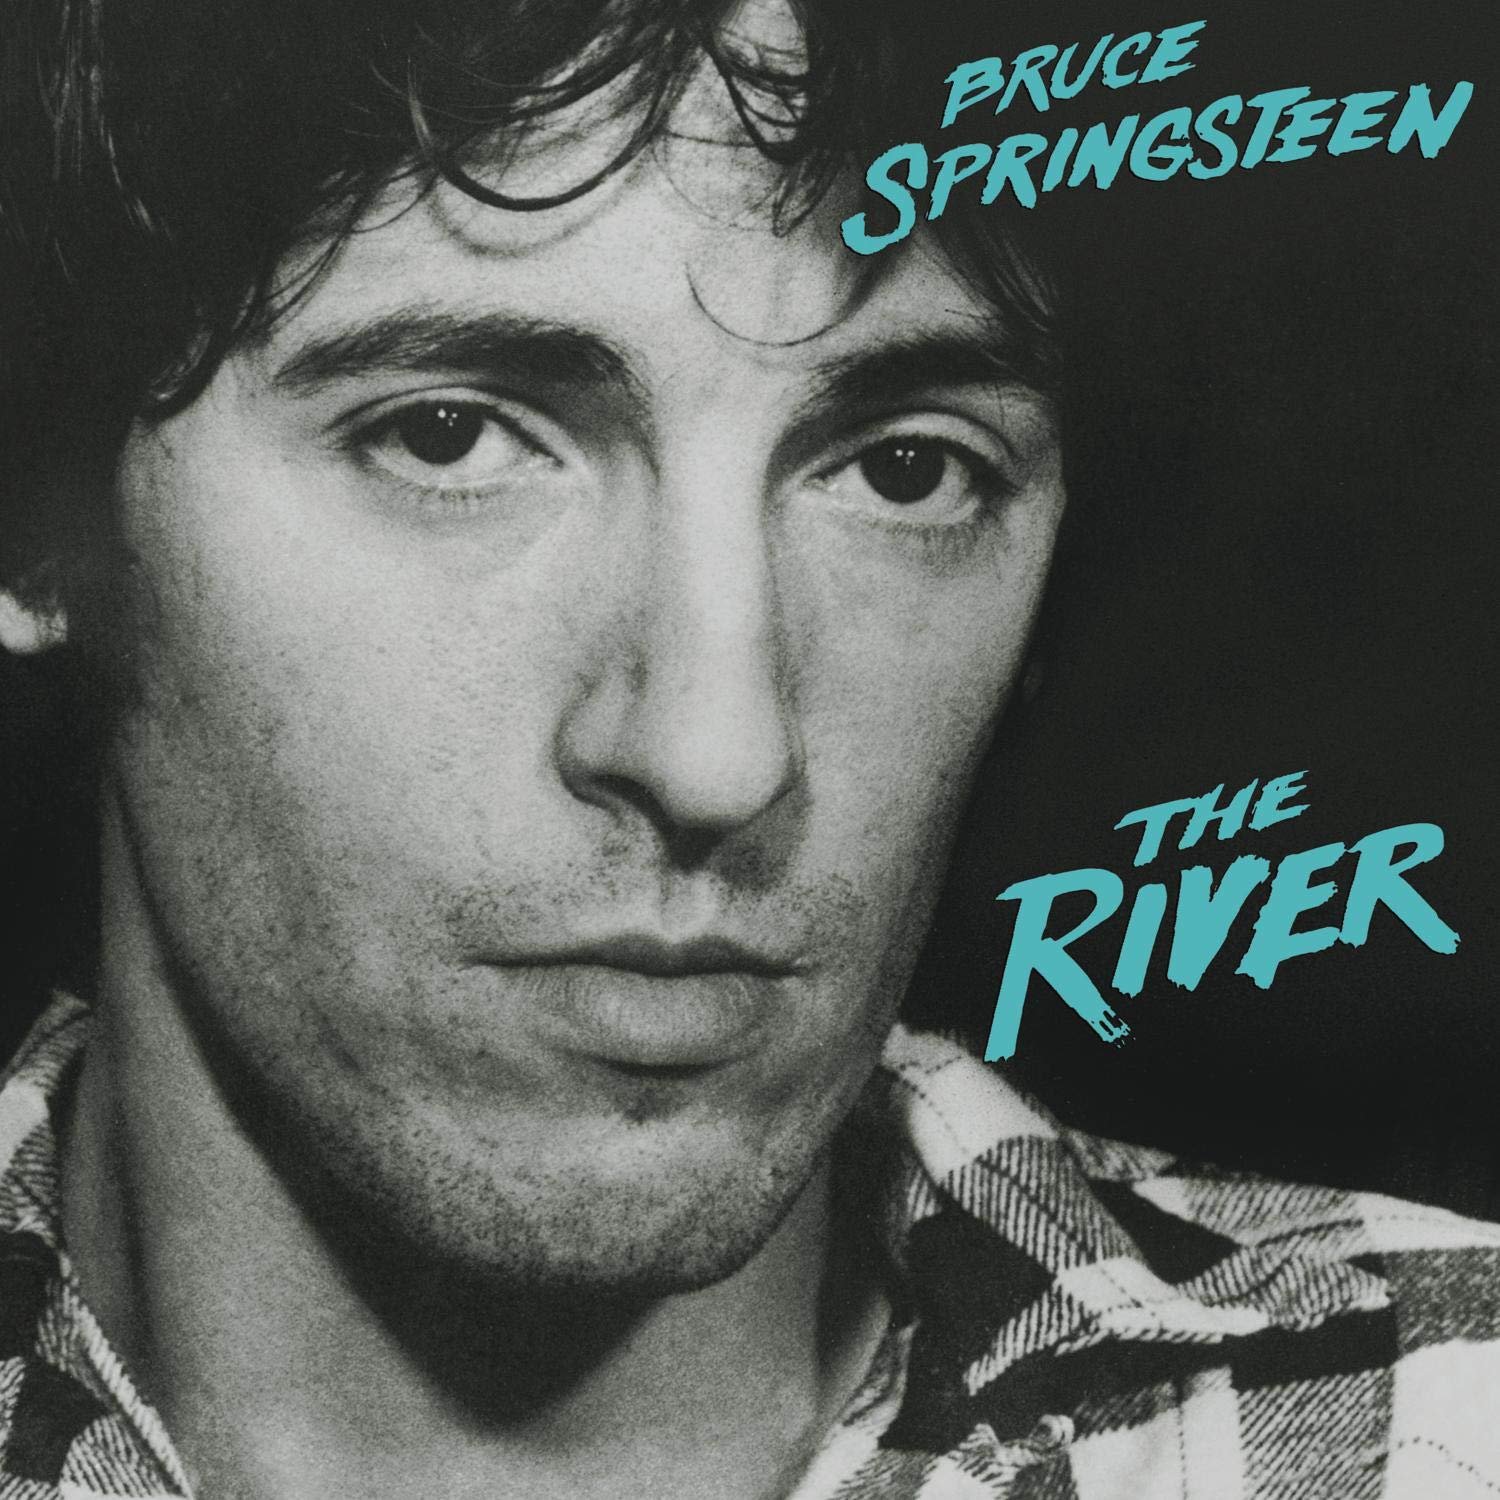 You are currently viewing Godišnjica objavljivanja dvostrukog albuma The River Brucea Springsteena